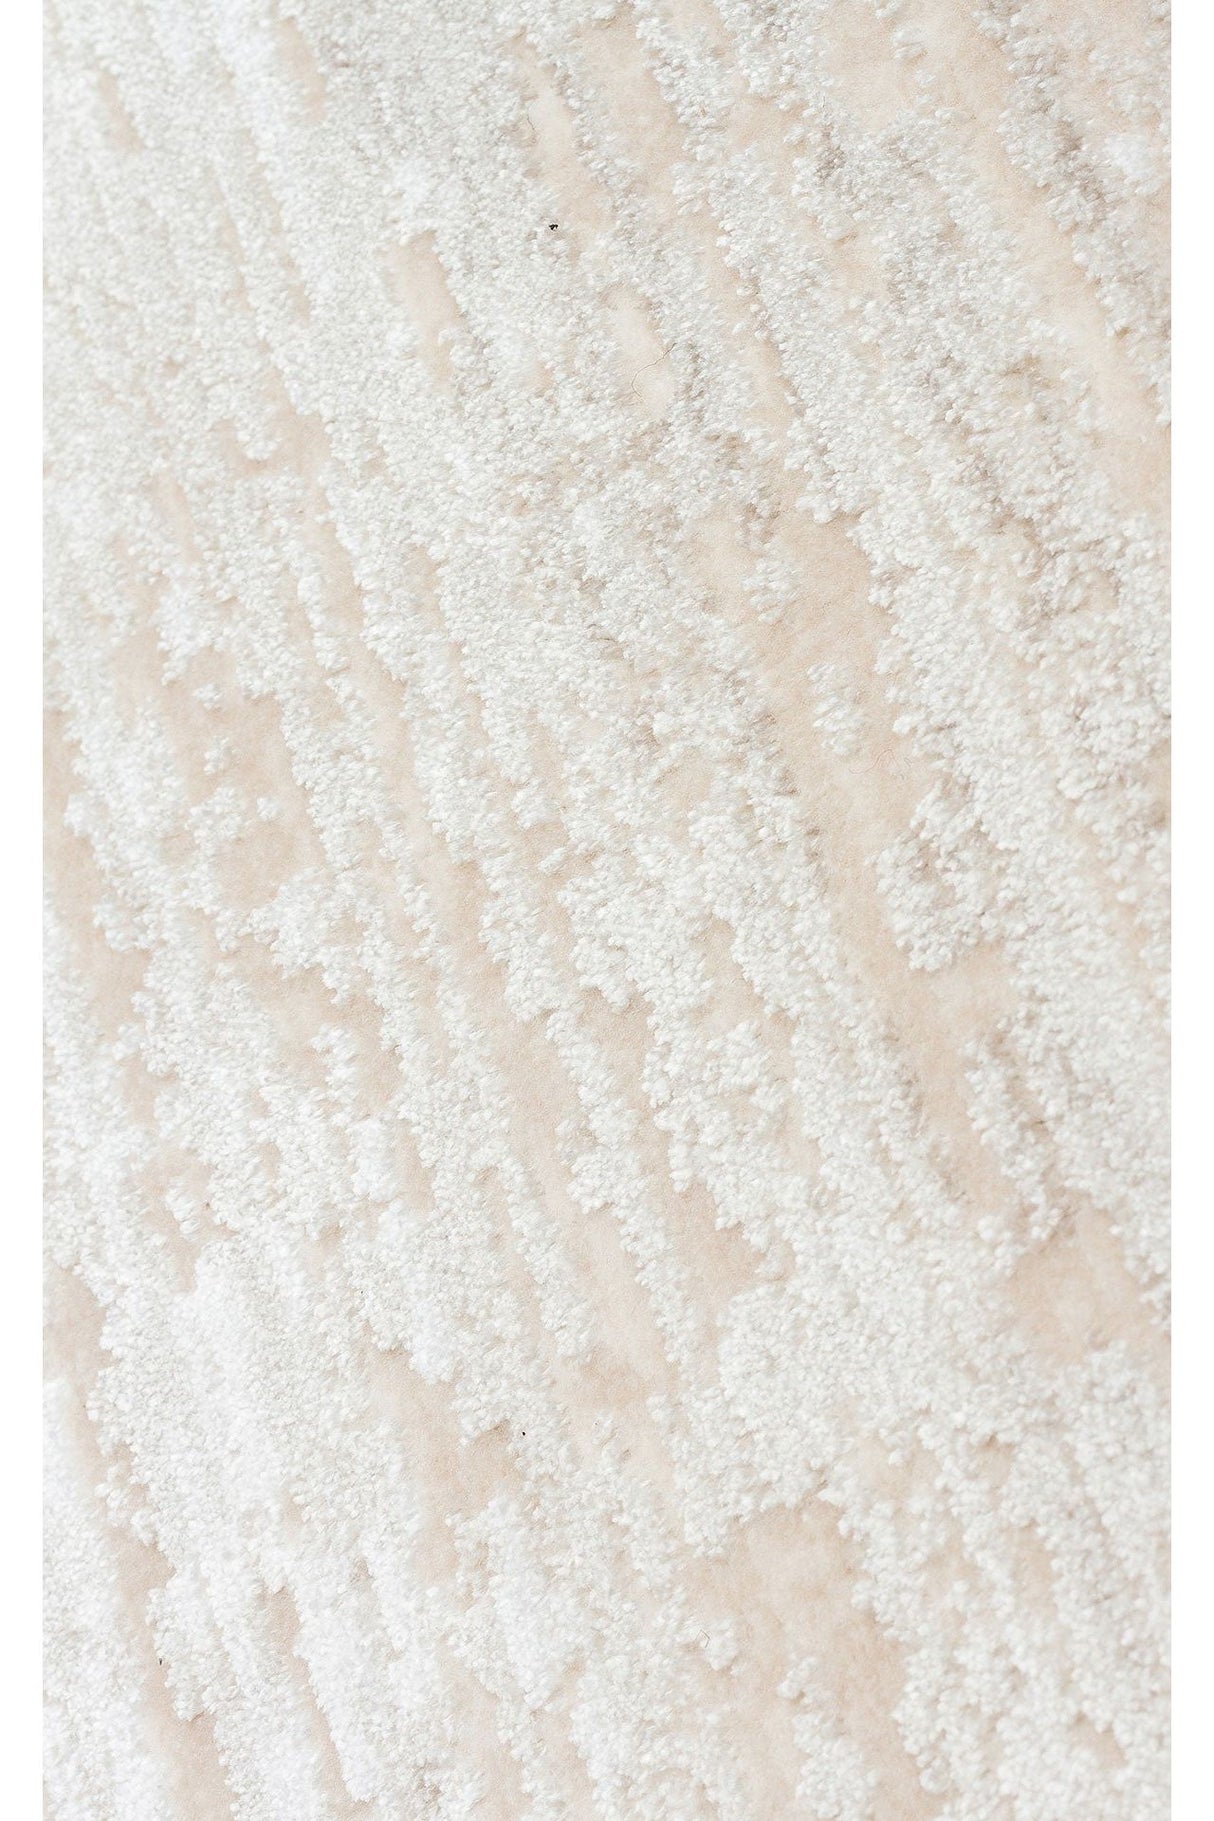 #Turkish_Carpets_Rugs# #Modern_Carpets# #Abrash_Carpets#Zrh 01 Cream Beige